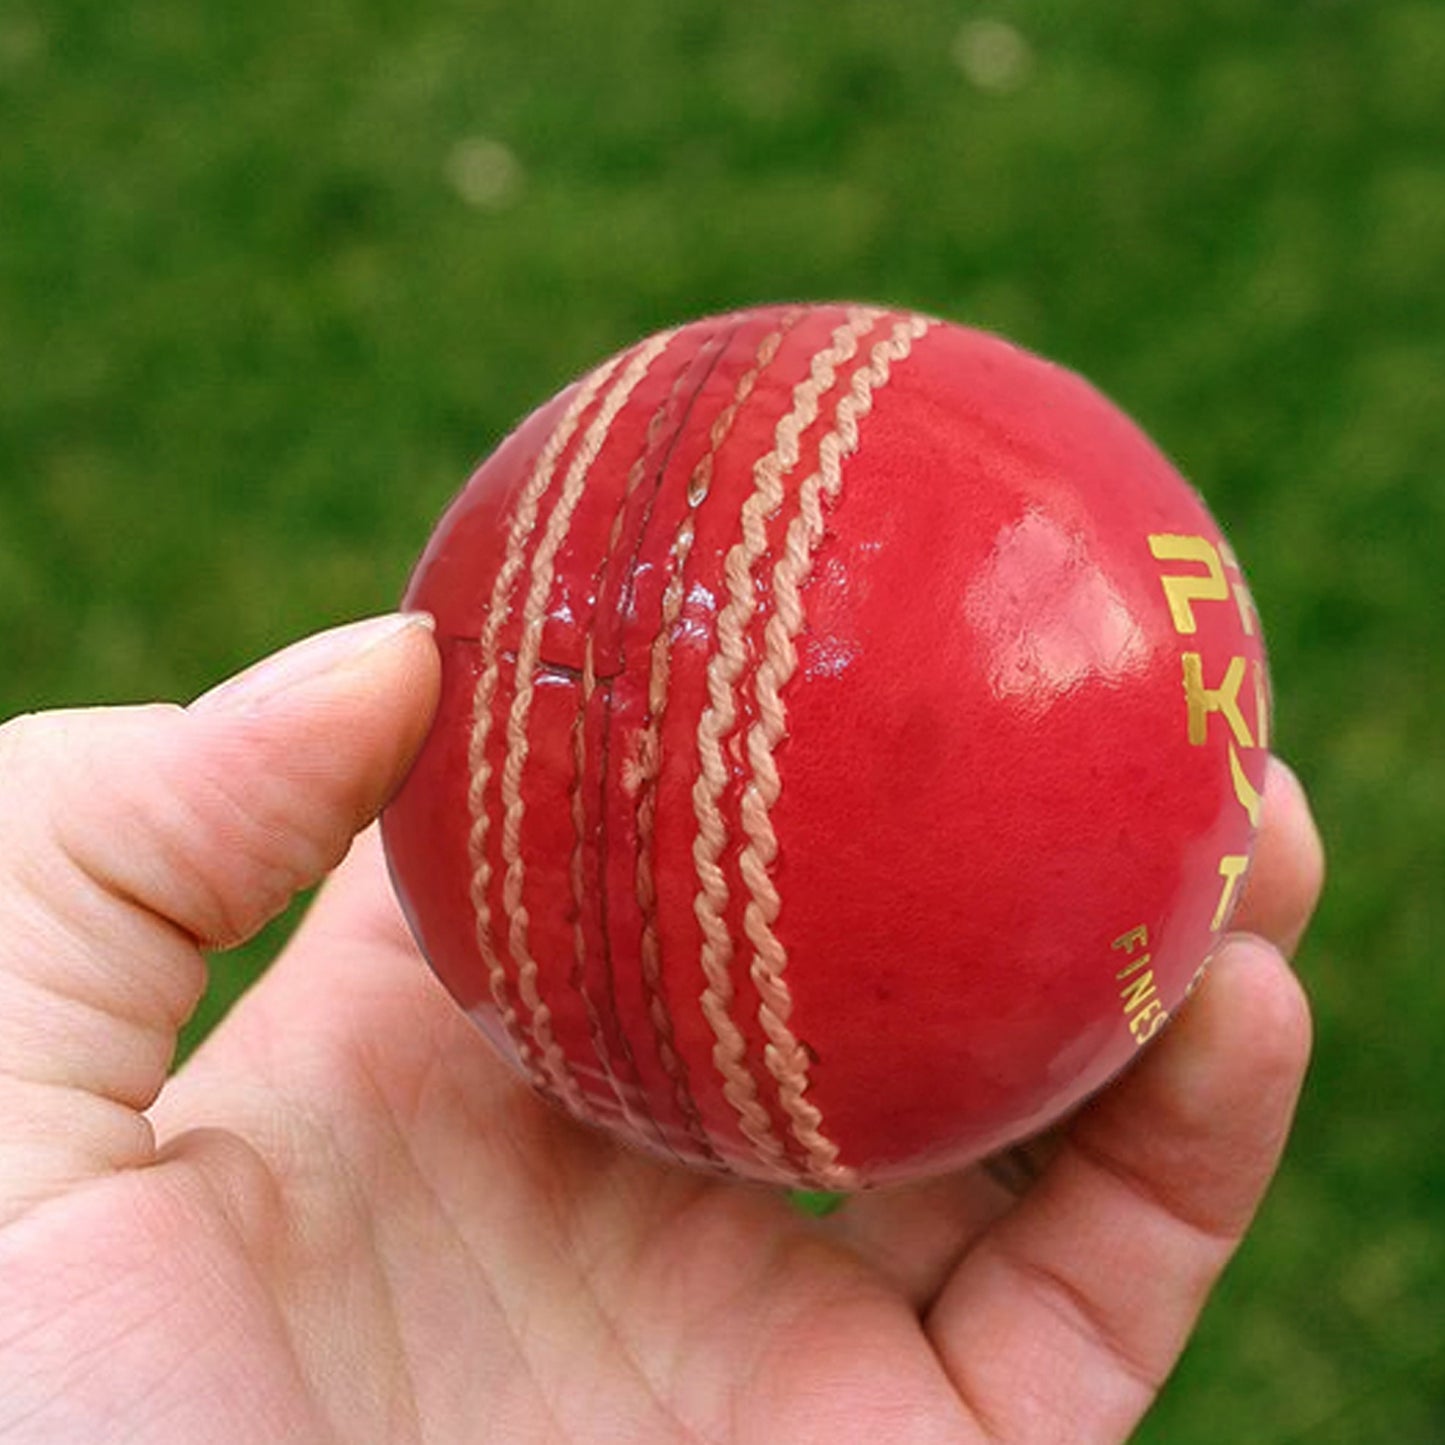 Prokick LB 101 Test Leather Cricket Ball, 1Pc (Red) - Best Price online Prokicksports.com